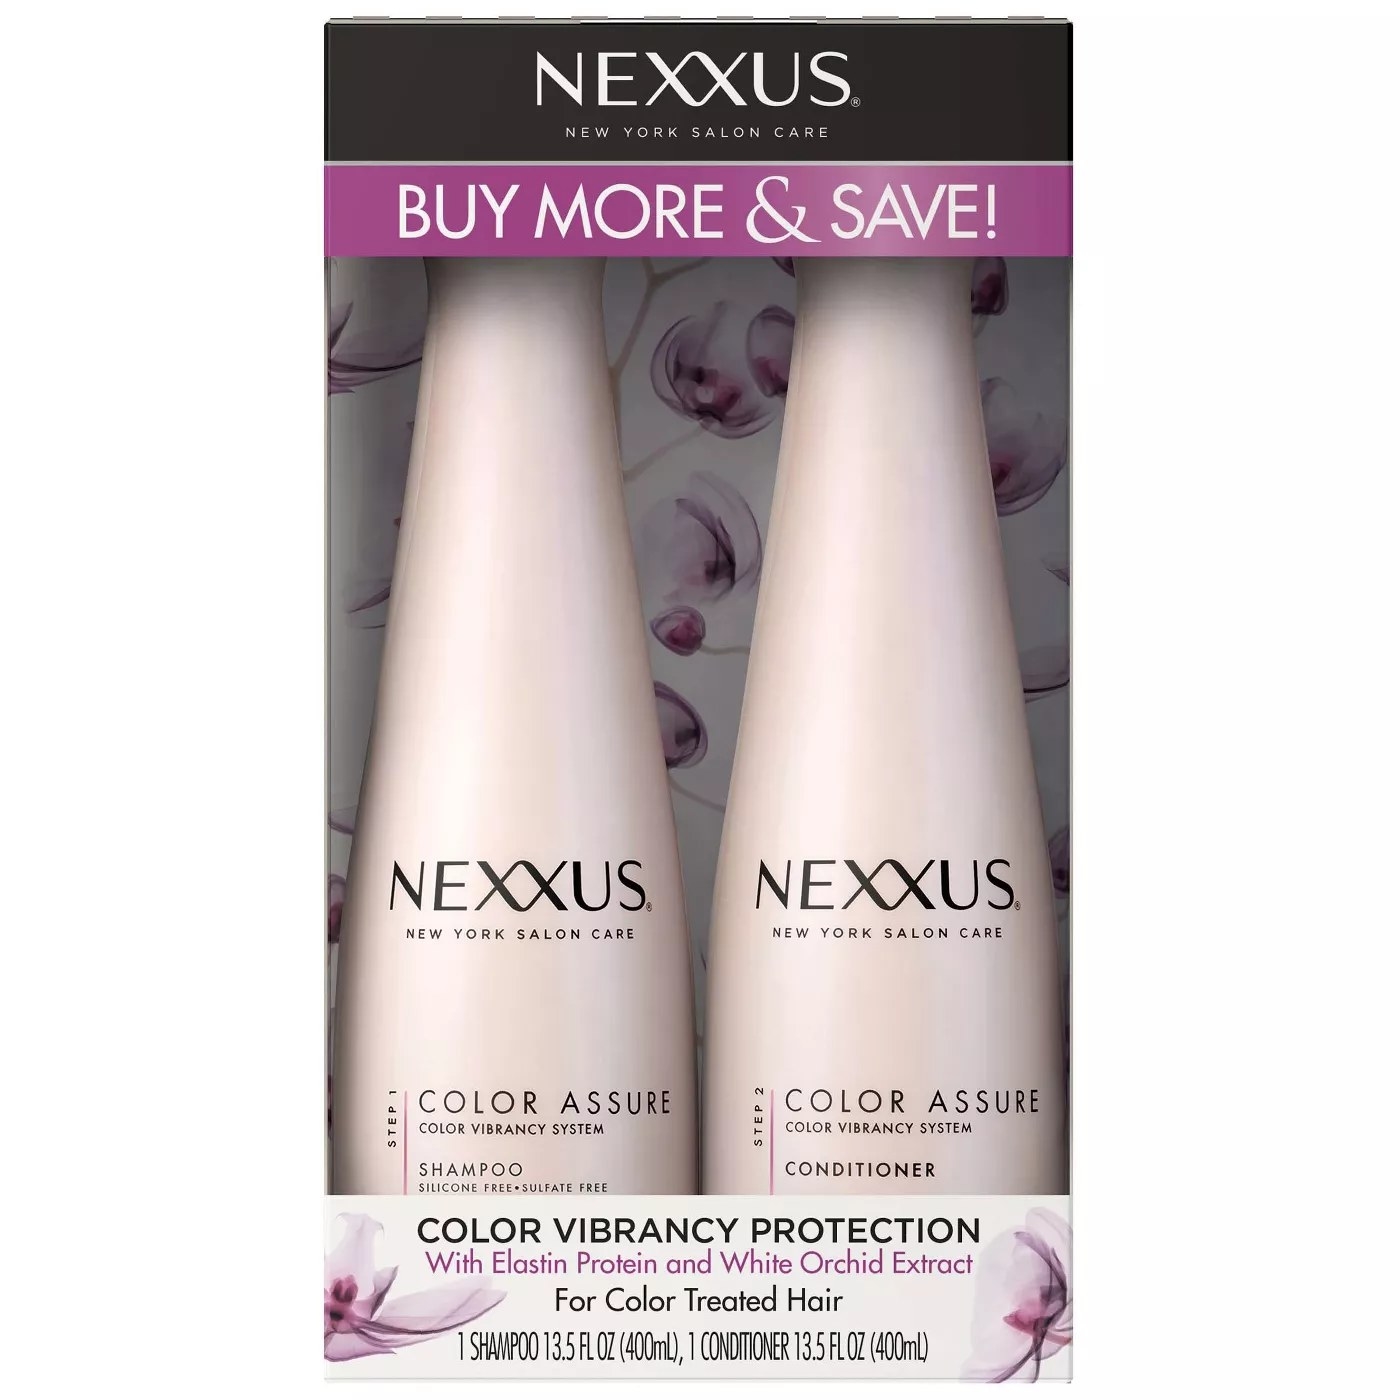 The Nexxus Color Assure shampoo and conditioner